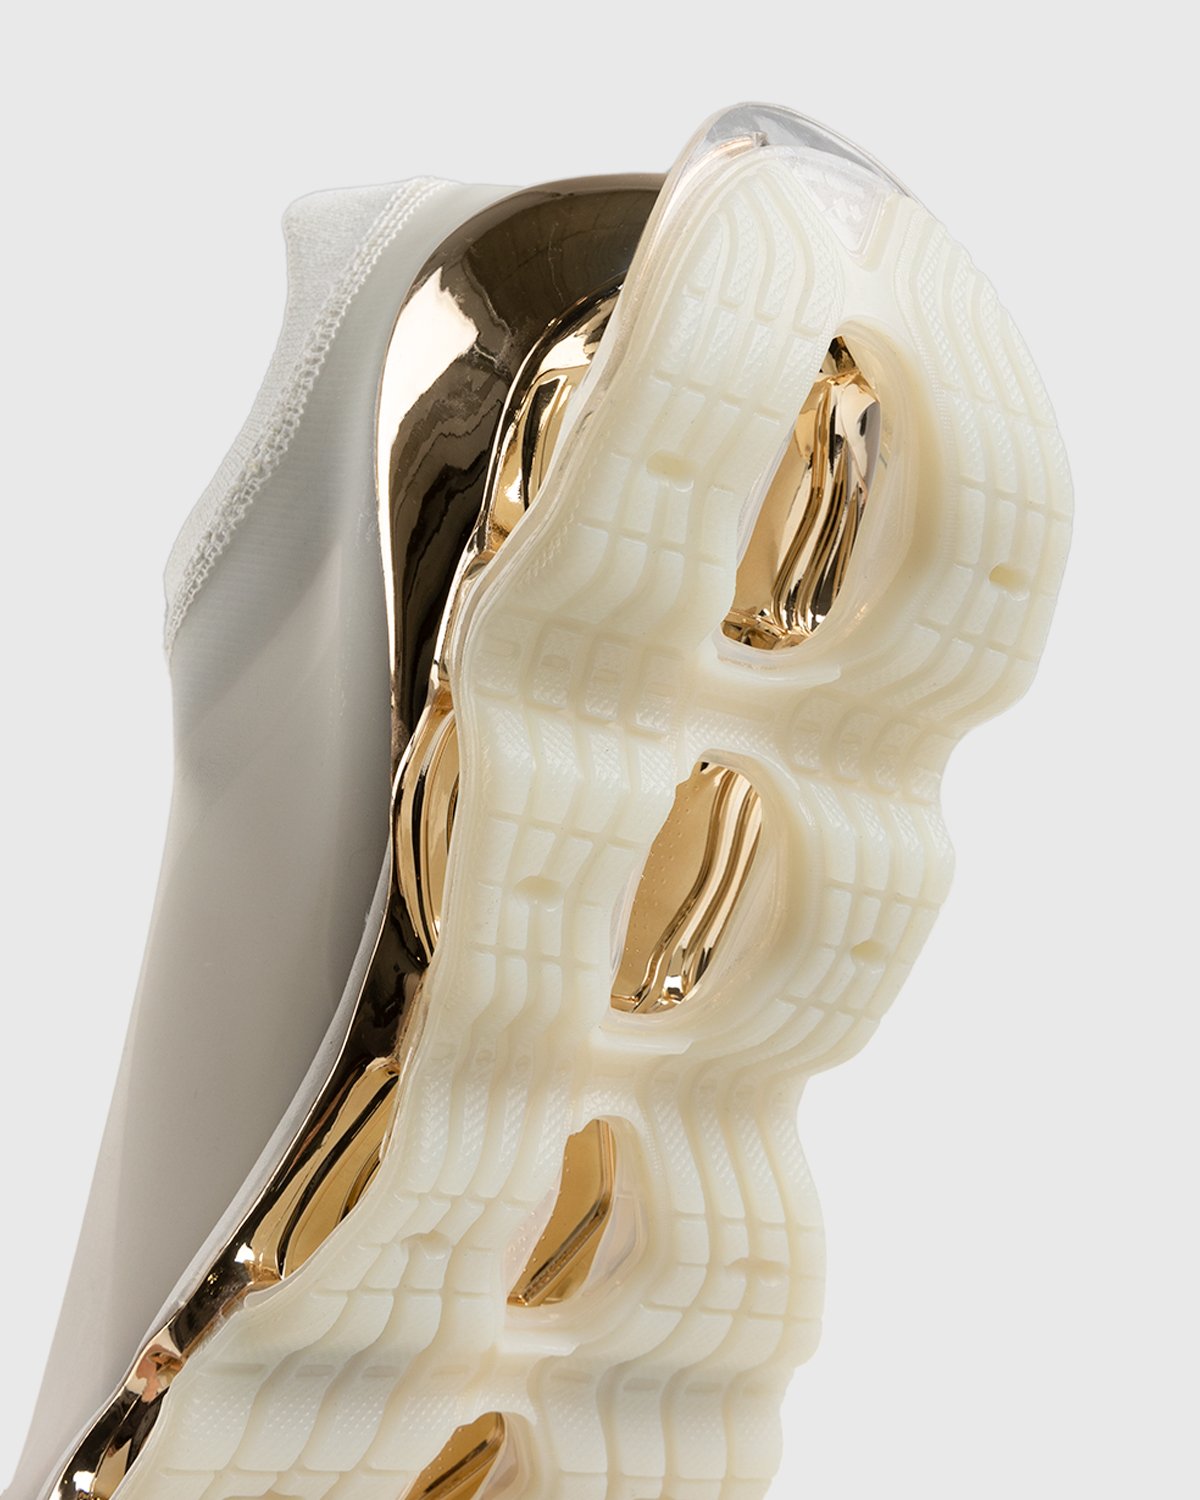 Mizuno x Sorayama - Wave Prophecy White/Gold - Footwear - Beige - Image 6